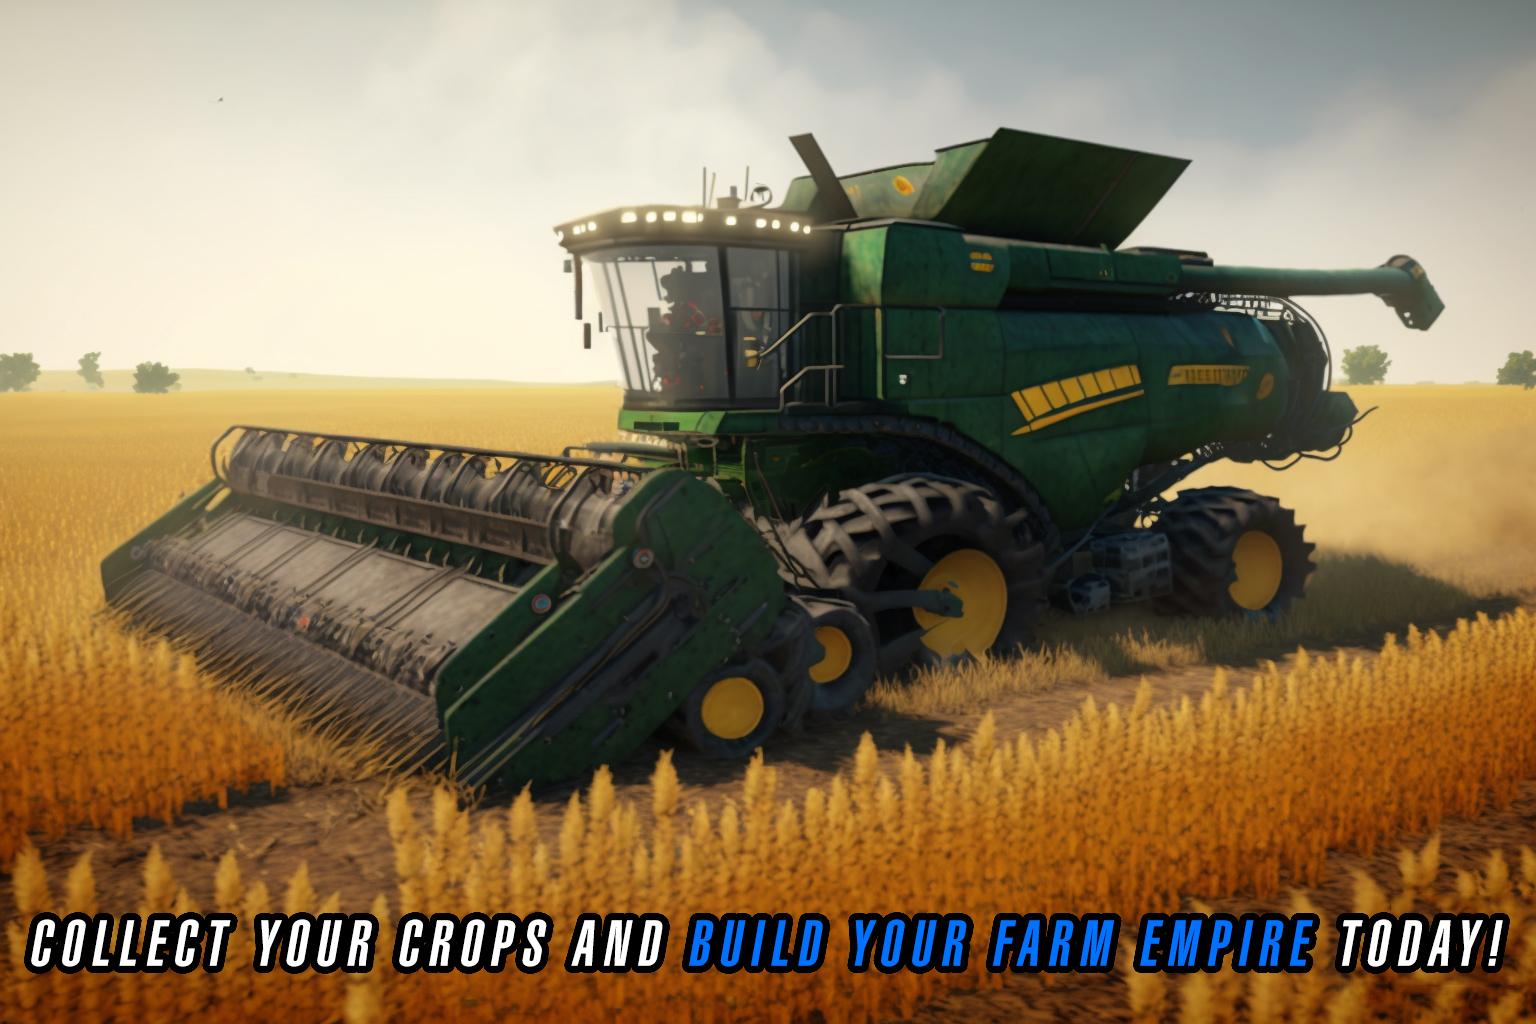 Farming Simulator 23 PRA PC!! 